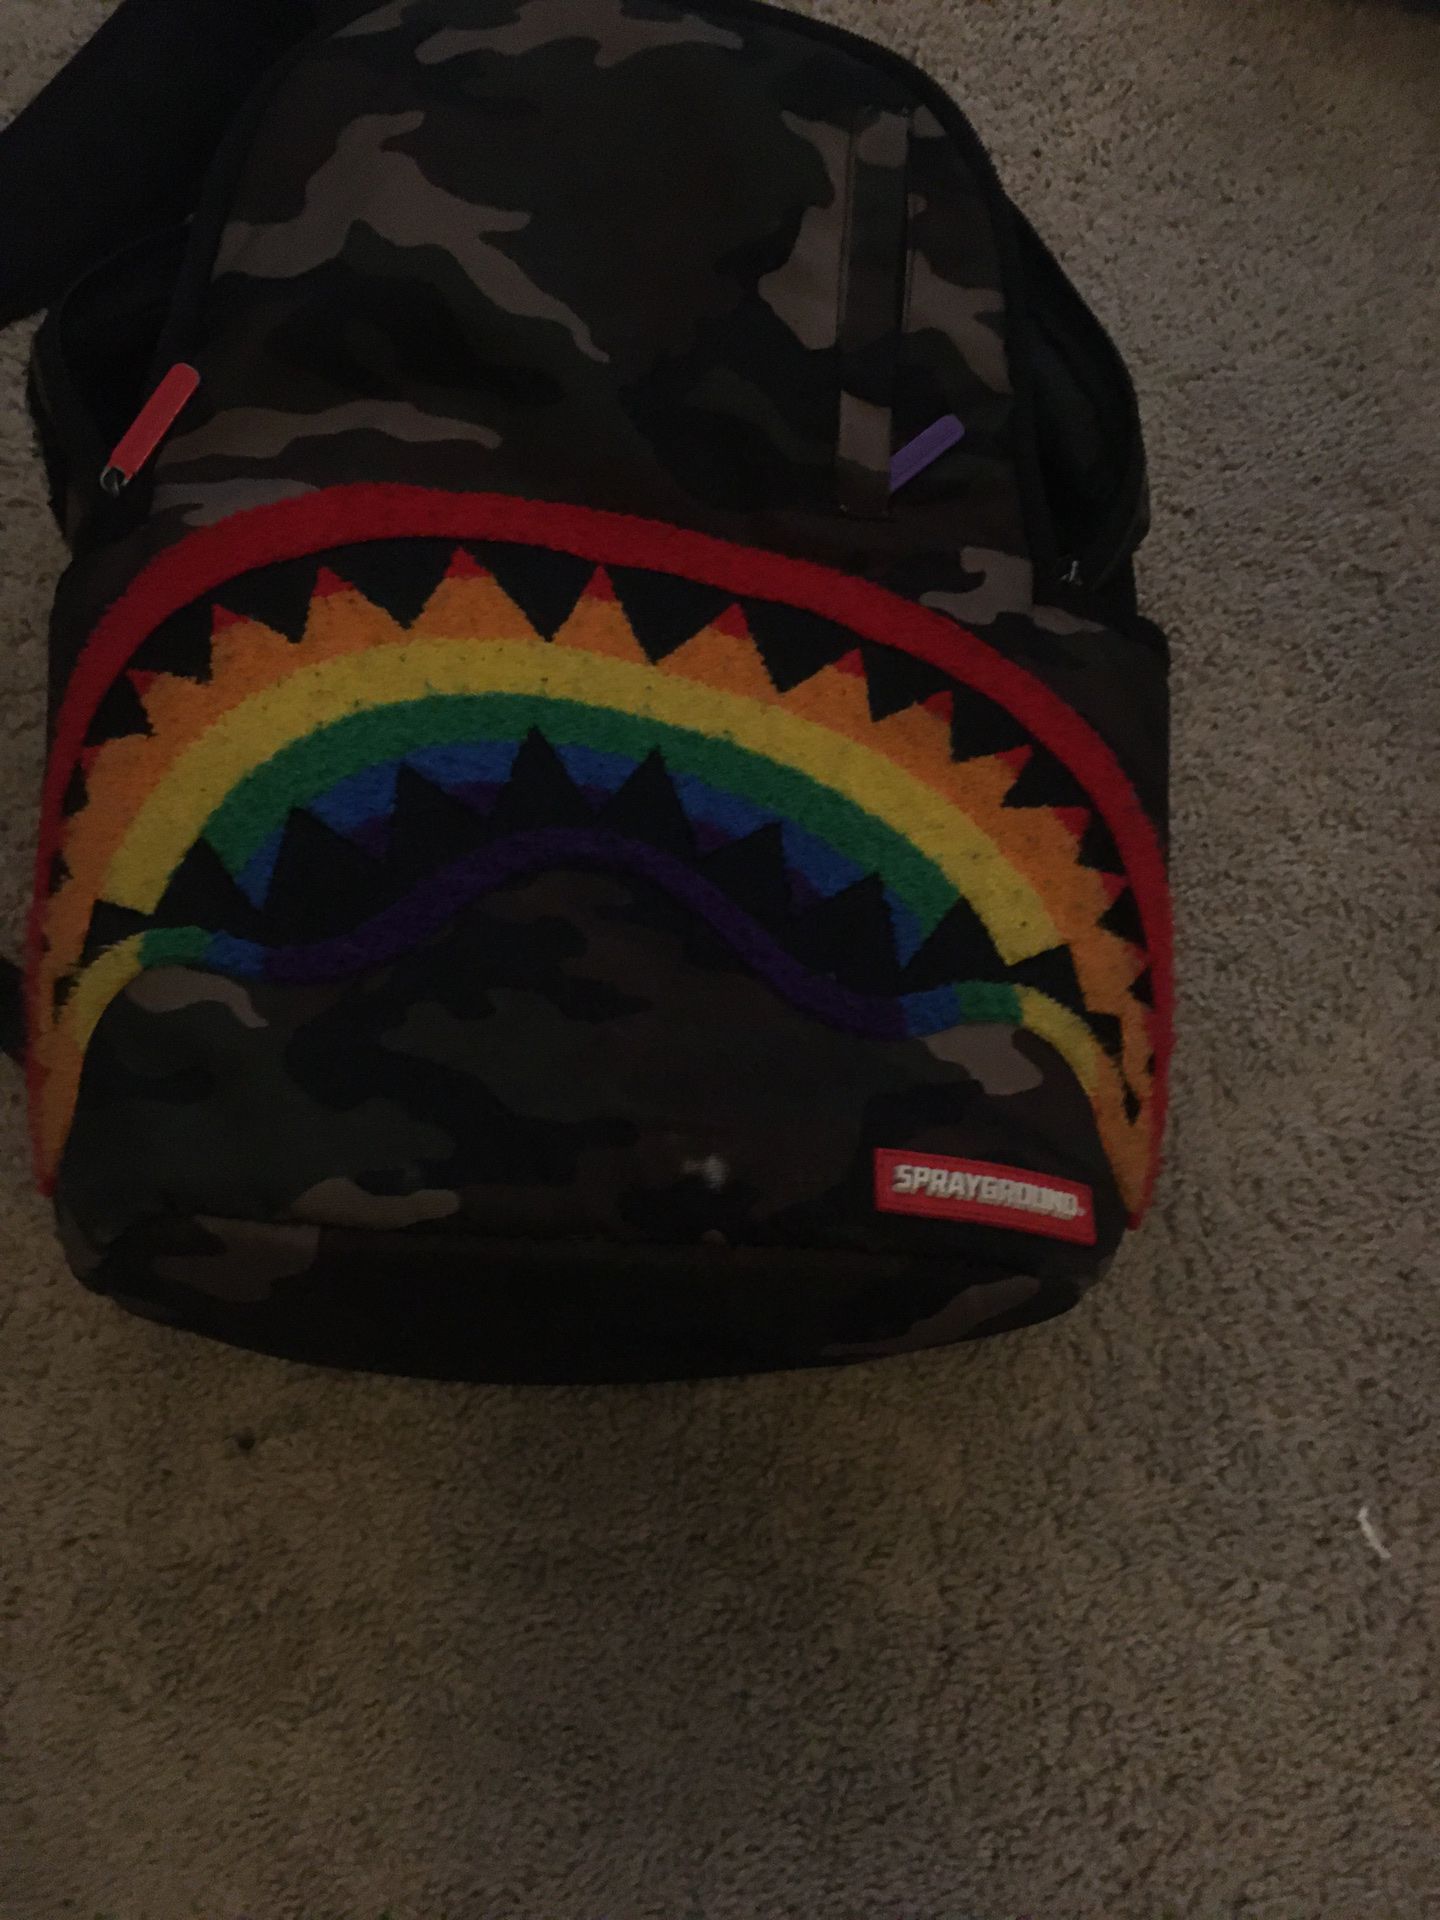 Bape rainbow Limited addition bookbag